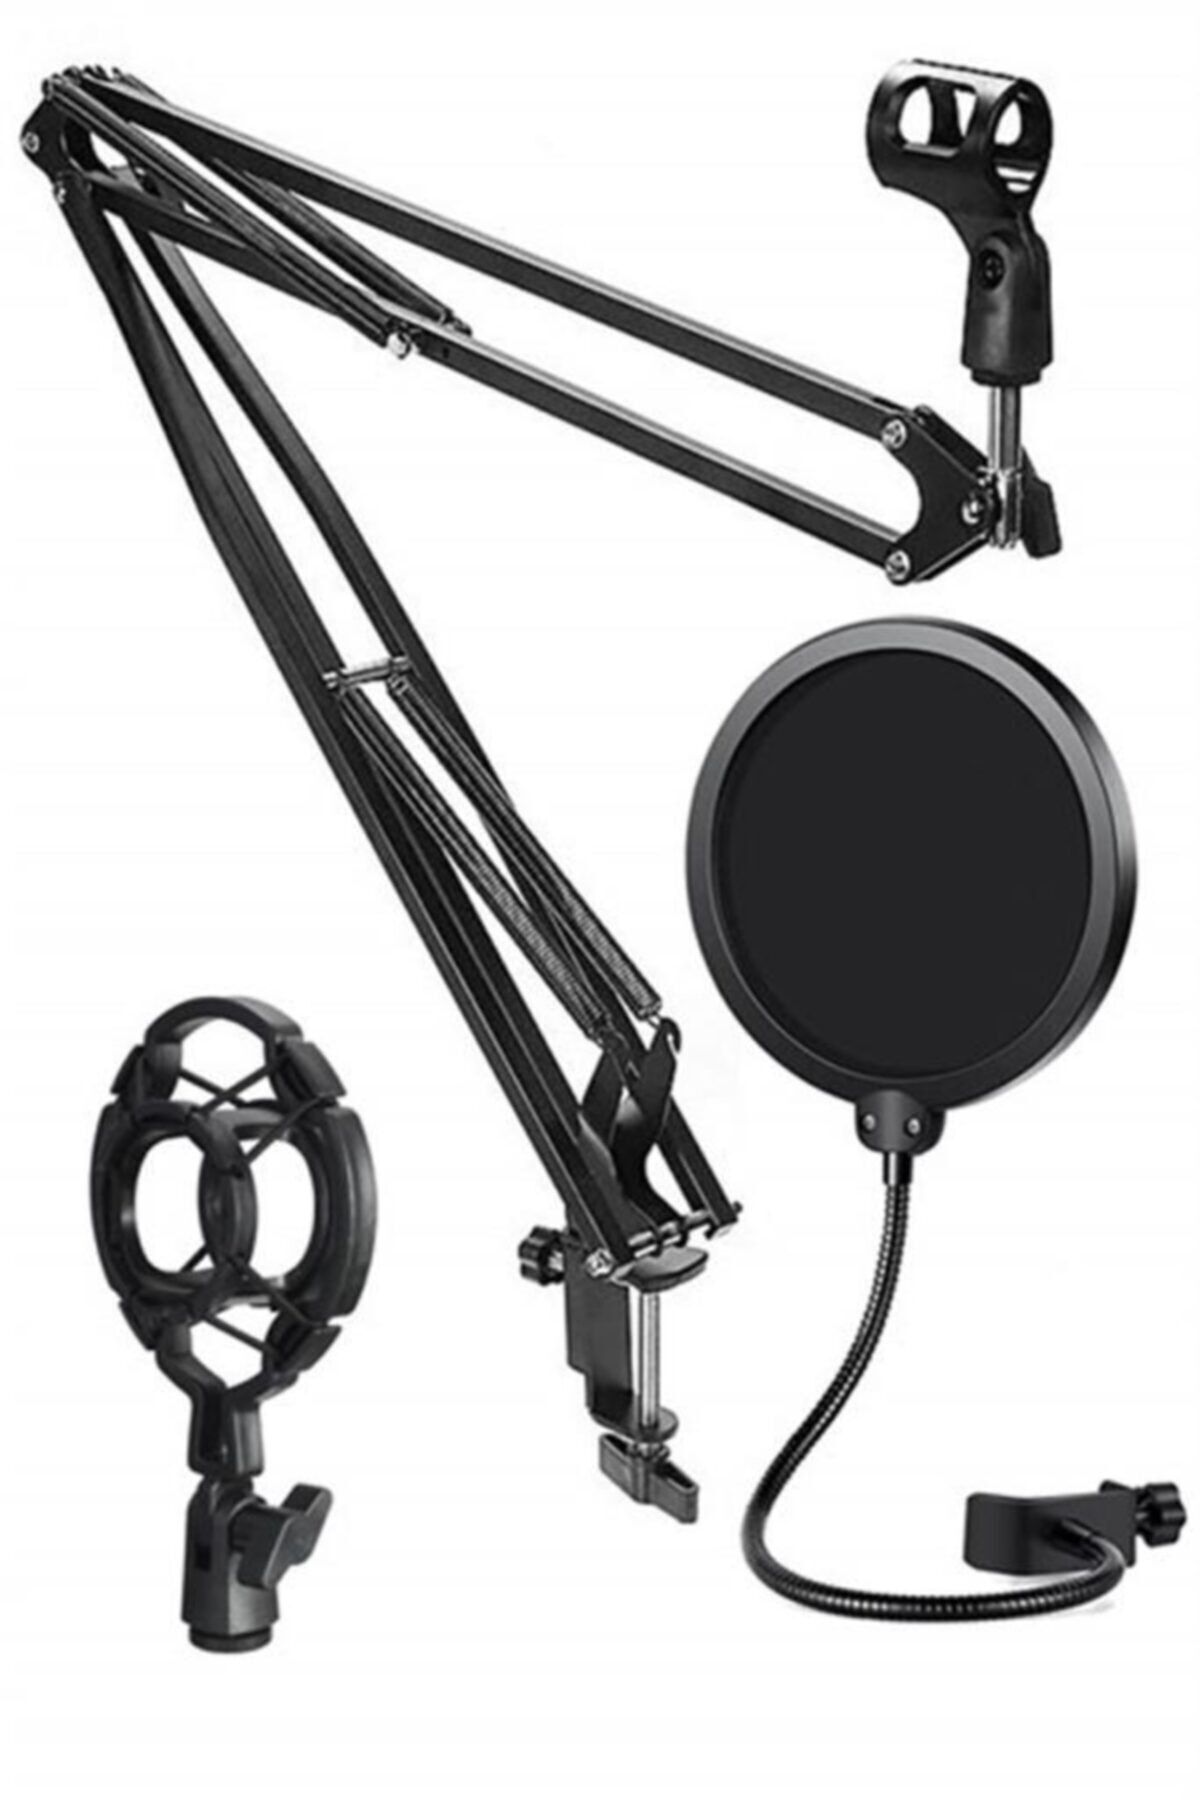 Lastvoice Nb39hyp Set Stüdyo Mikrofon Için Stand Shock Mount Filtre (35X35 CM)